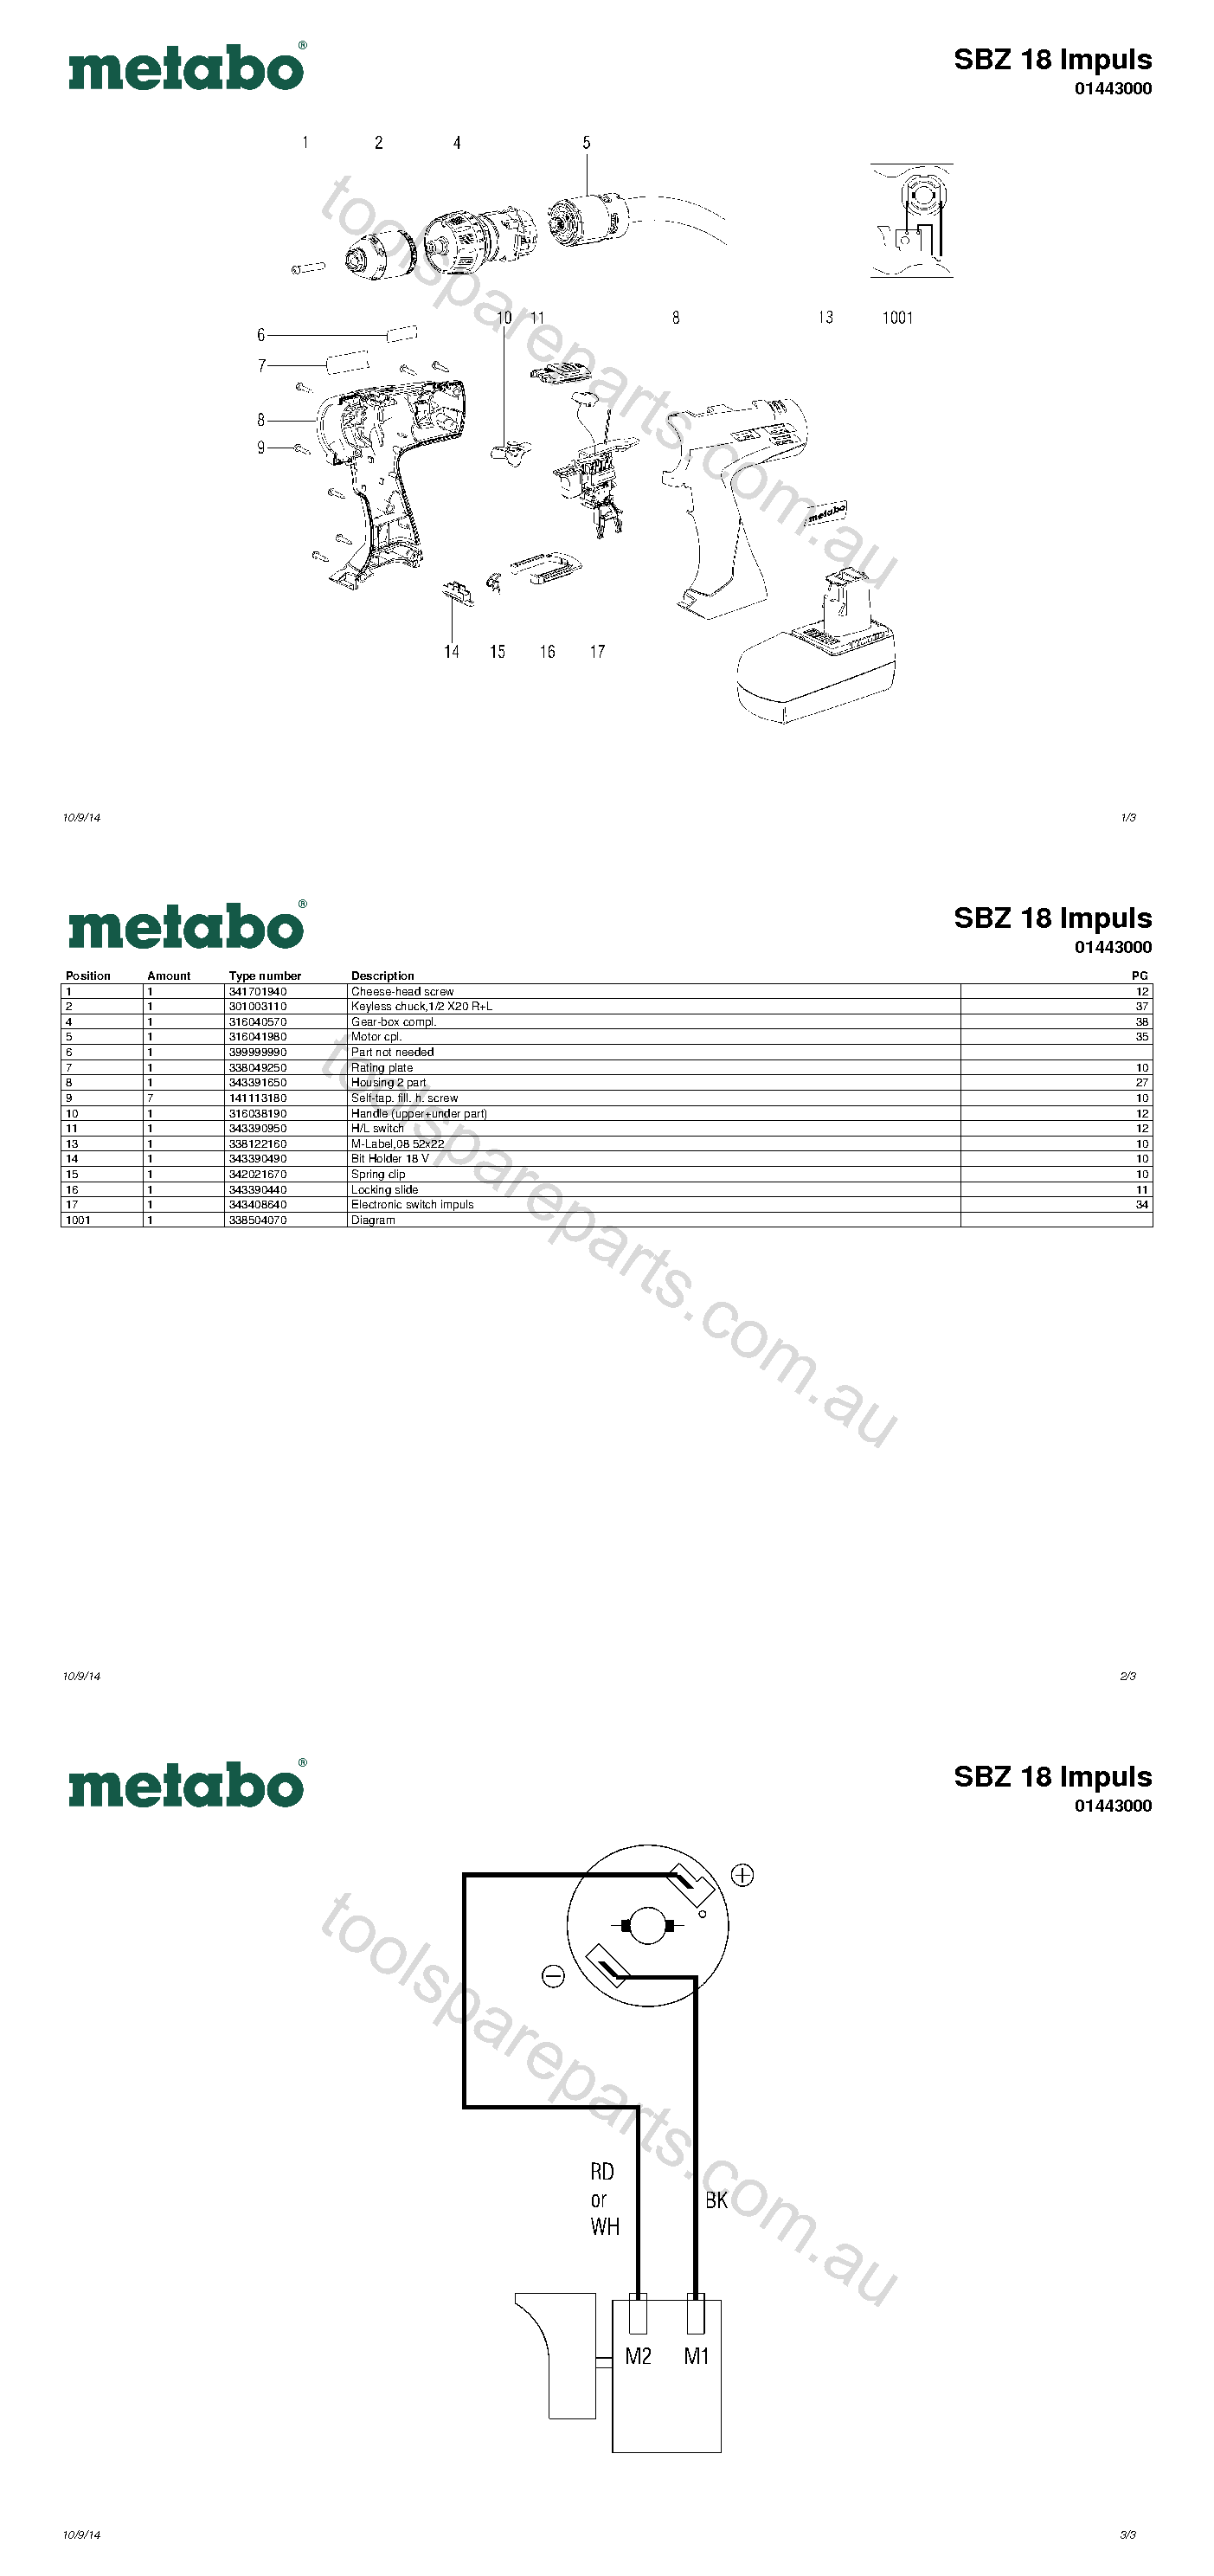 Metabo SBZ 18 Impuls 01443000  Diagram 1